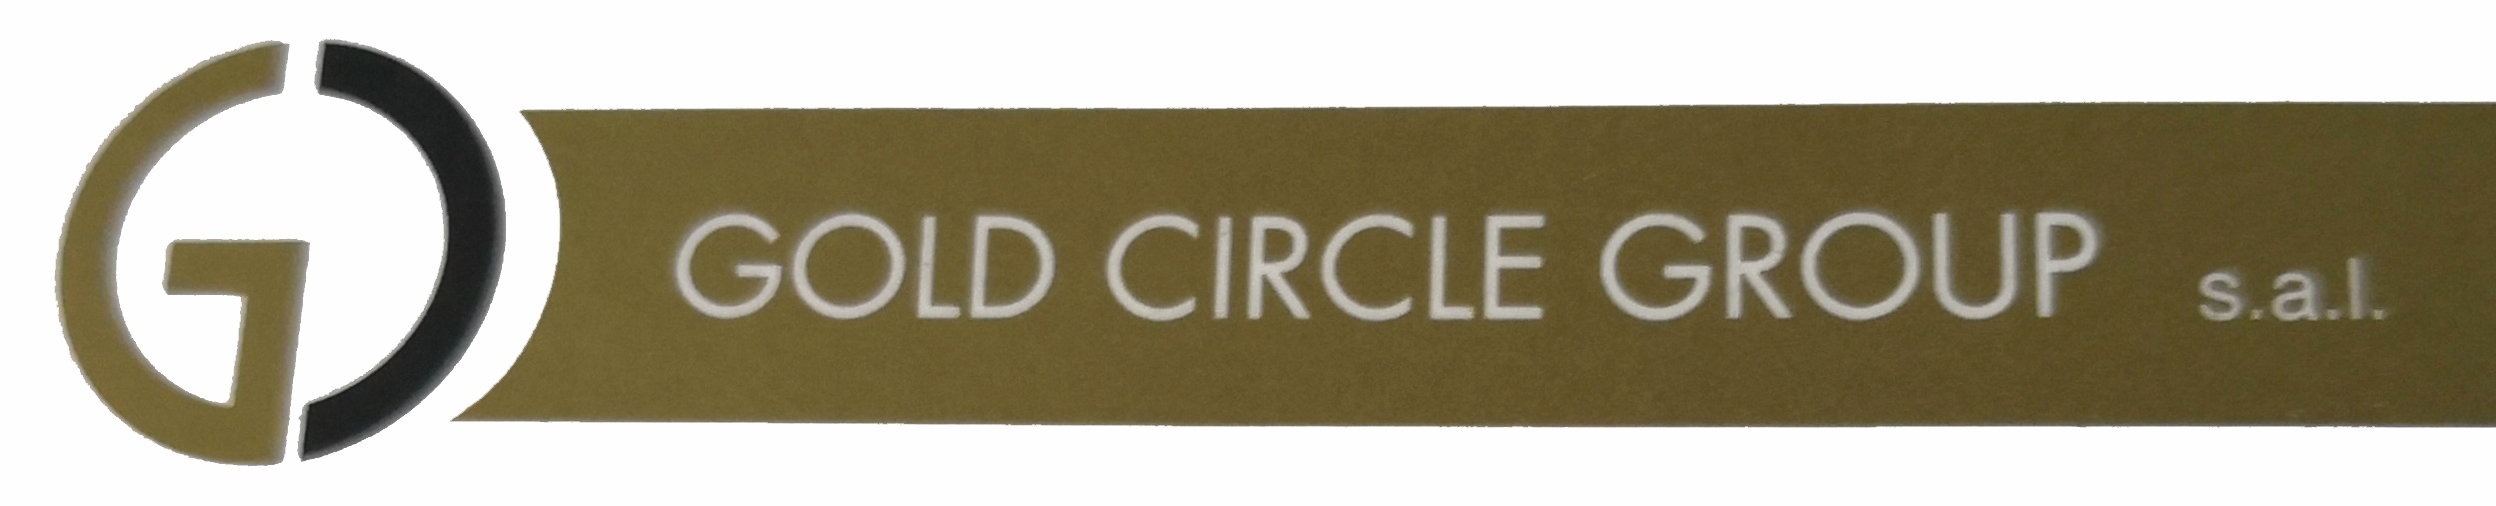 Gold circle group logo